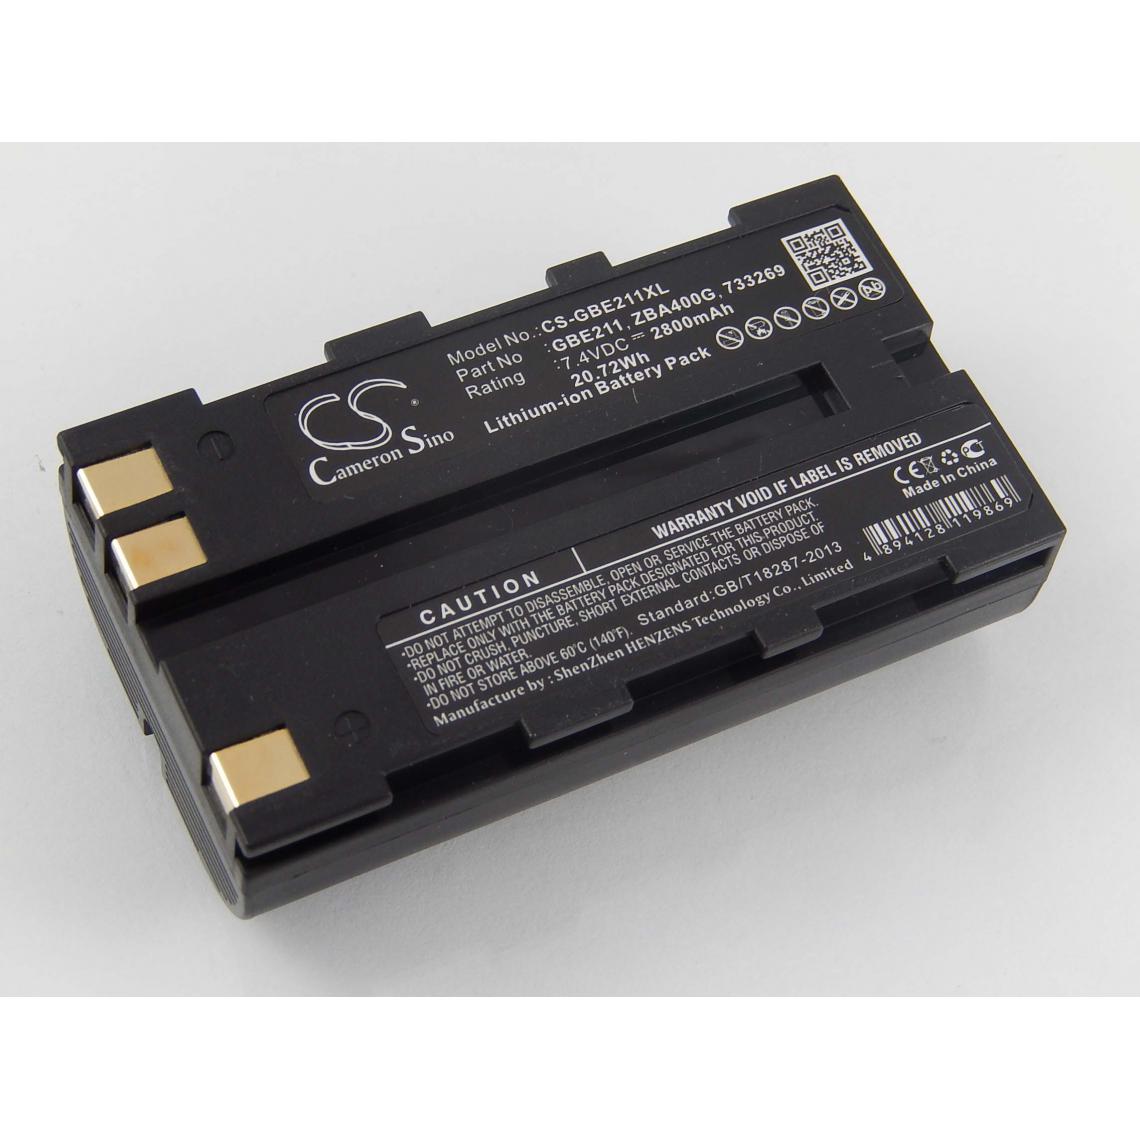 Vhbw - vhbw Batterie compatible avec Leica TC407, TC802, TC803, TC805 dispositif de mesure laser, outil de mesure (2800mAh, 7,4V, Li-ion) - Piles rechargeables